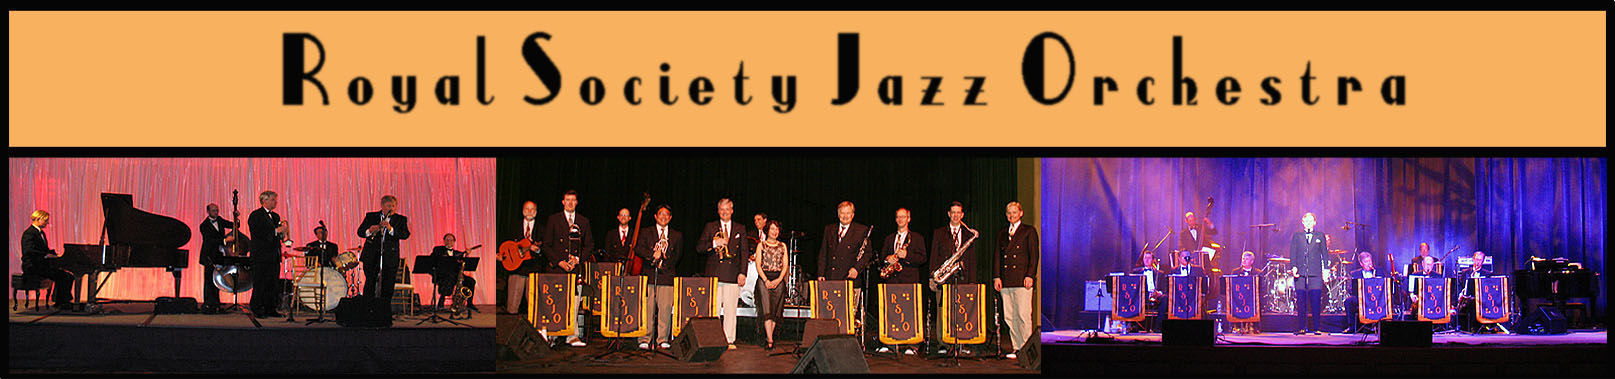 Royal Society Jazz Orchestra, big band swing, swing, 1920s jazz, traditional jazz, san francisco bay area